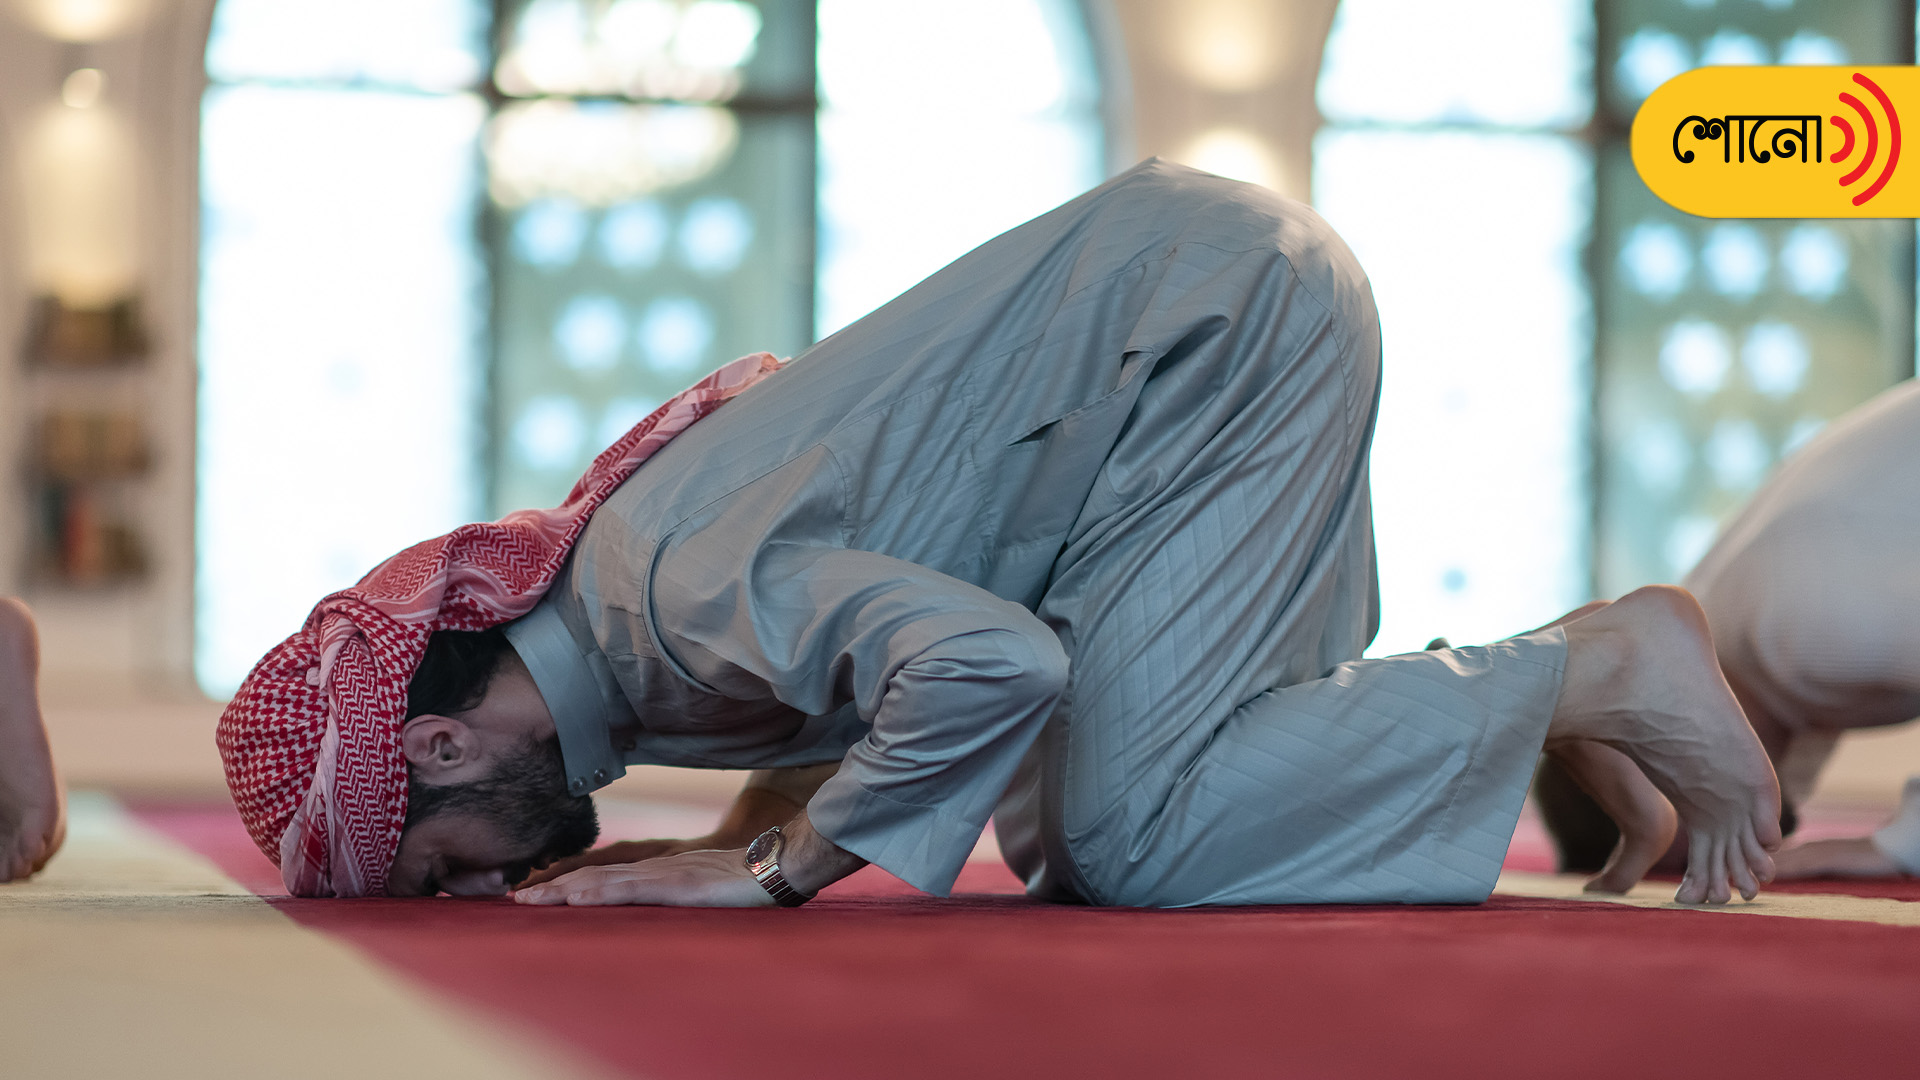 Images of Muslims praying at Paris airport stirs row